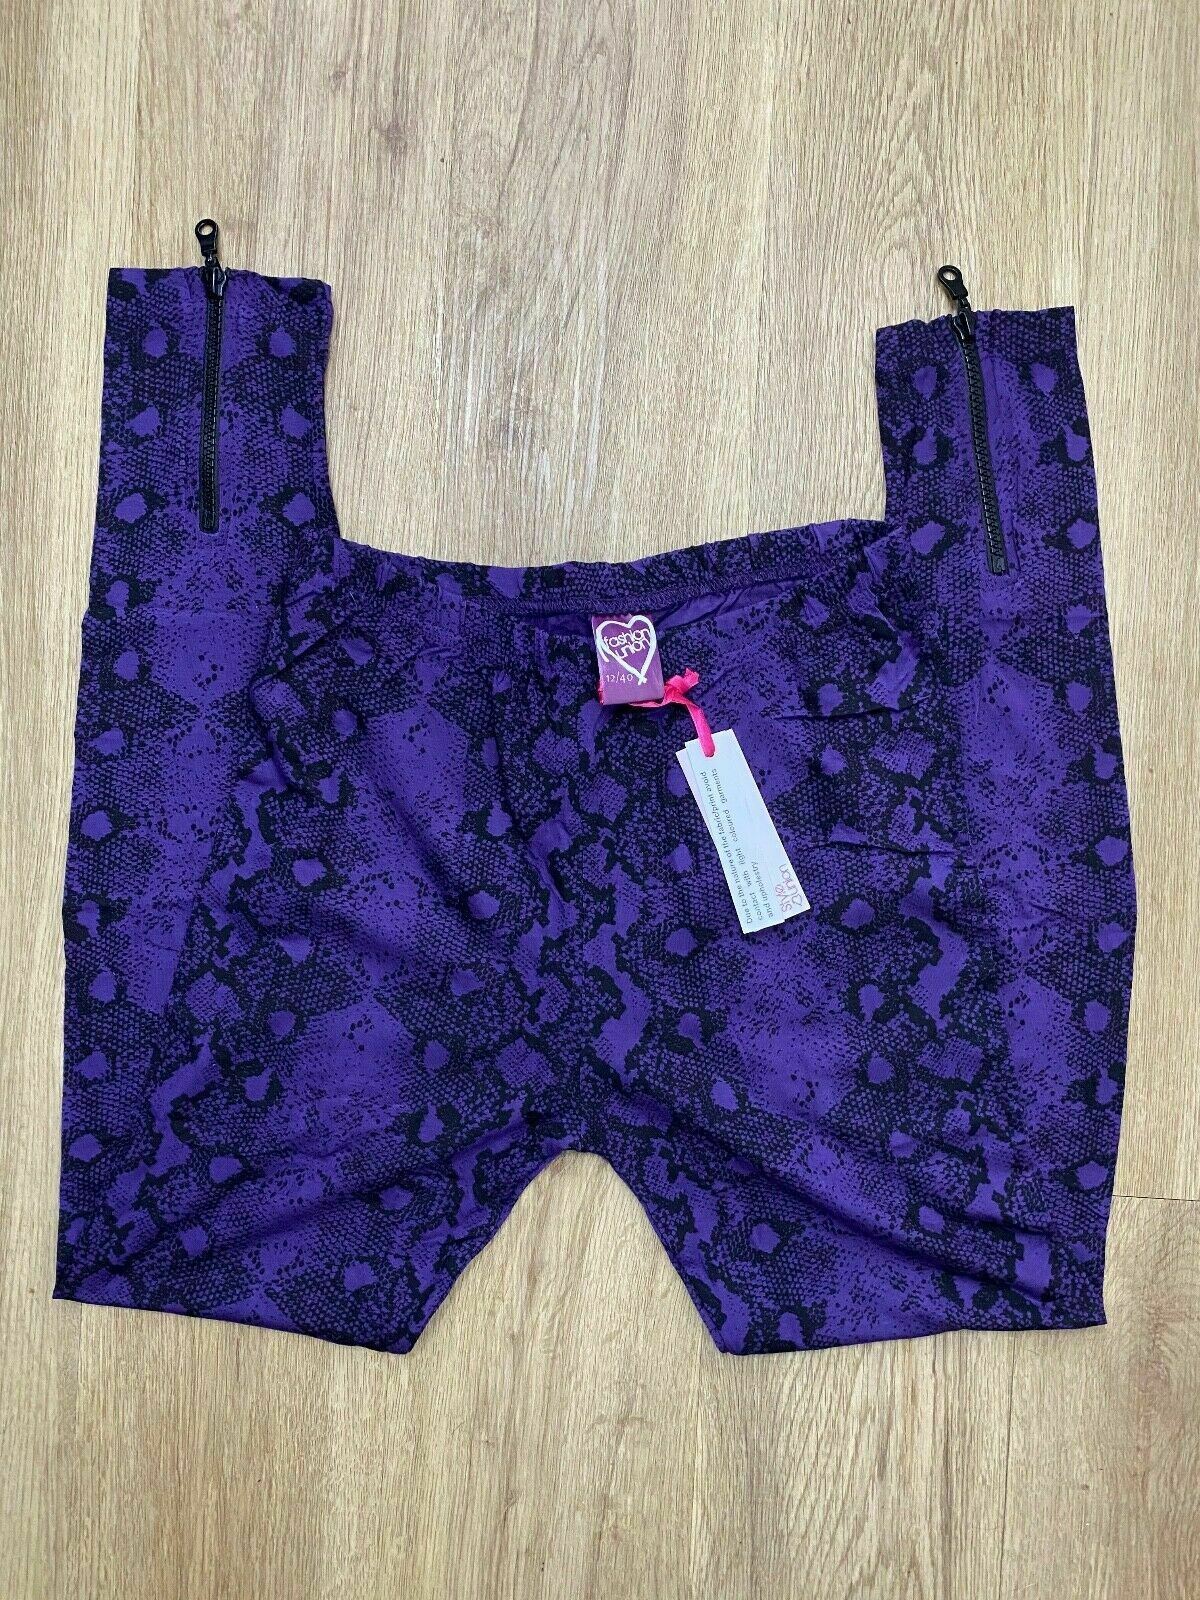 Fashion Union Purple Snake Print Legging Size 12 (8 - 12) Zip Hem Detail